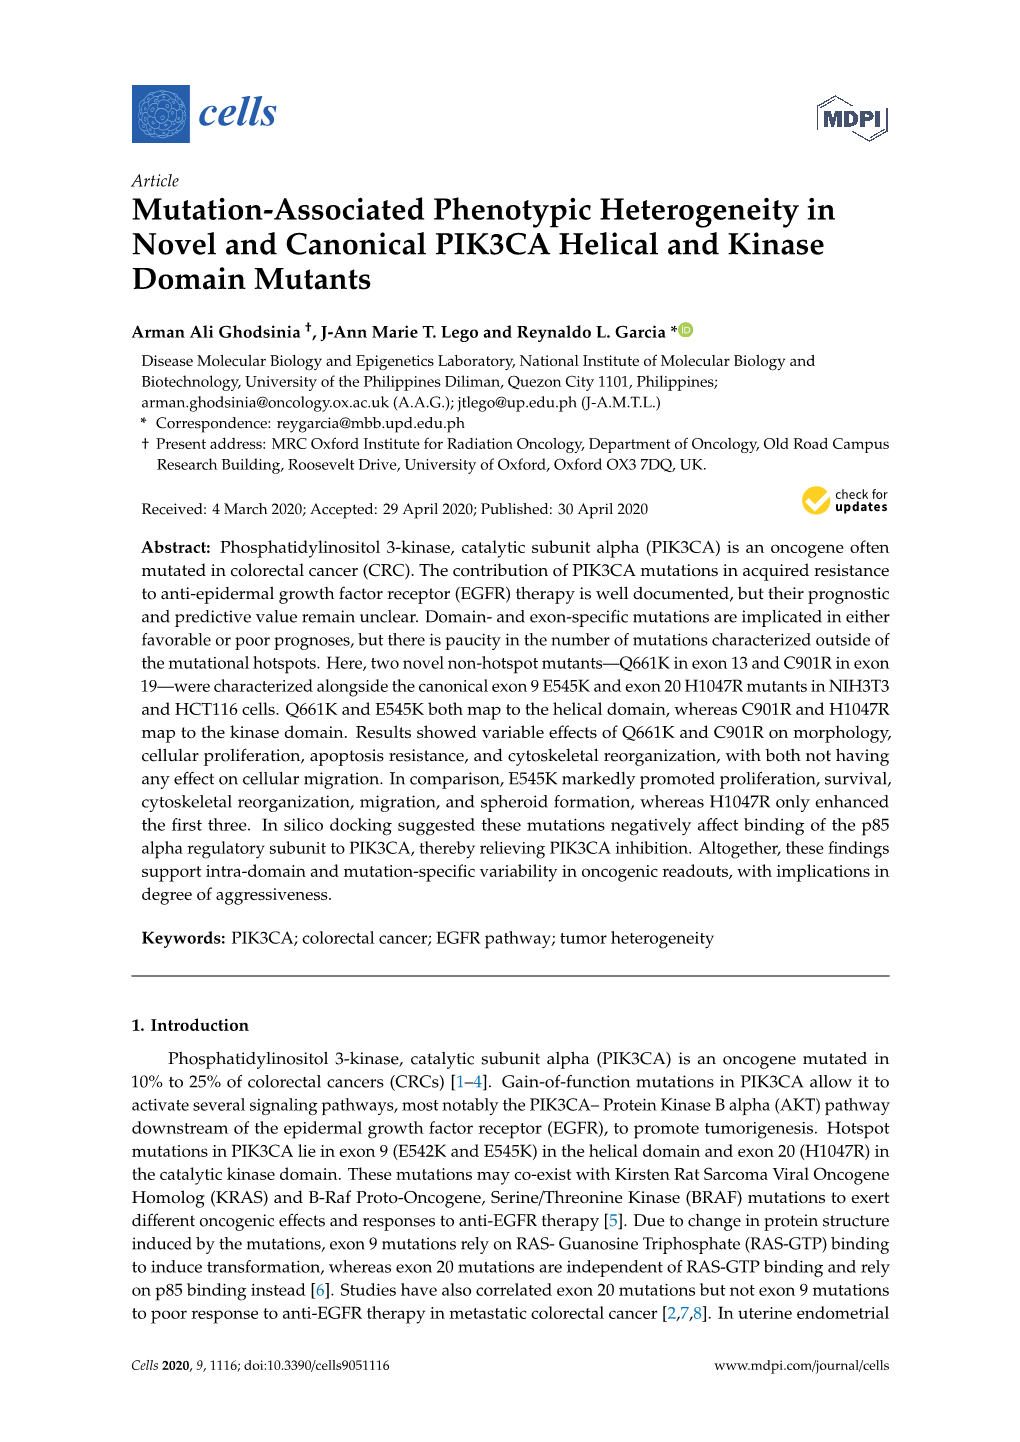 Mutation-Associated Phenotypic Heterogeneity in Novel and Canonical PIK3CA Helical and Kinase Domain Mutants